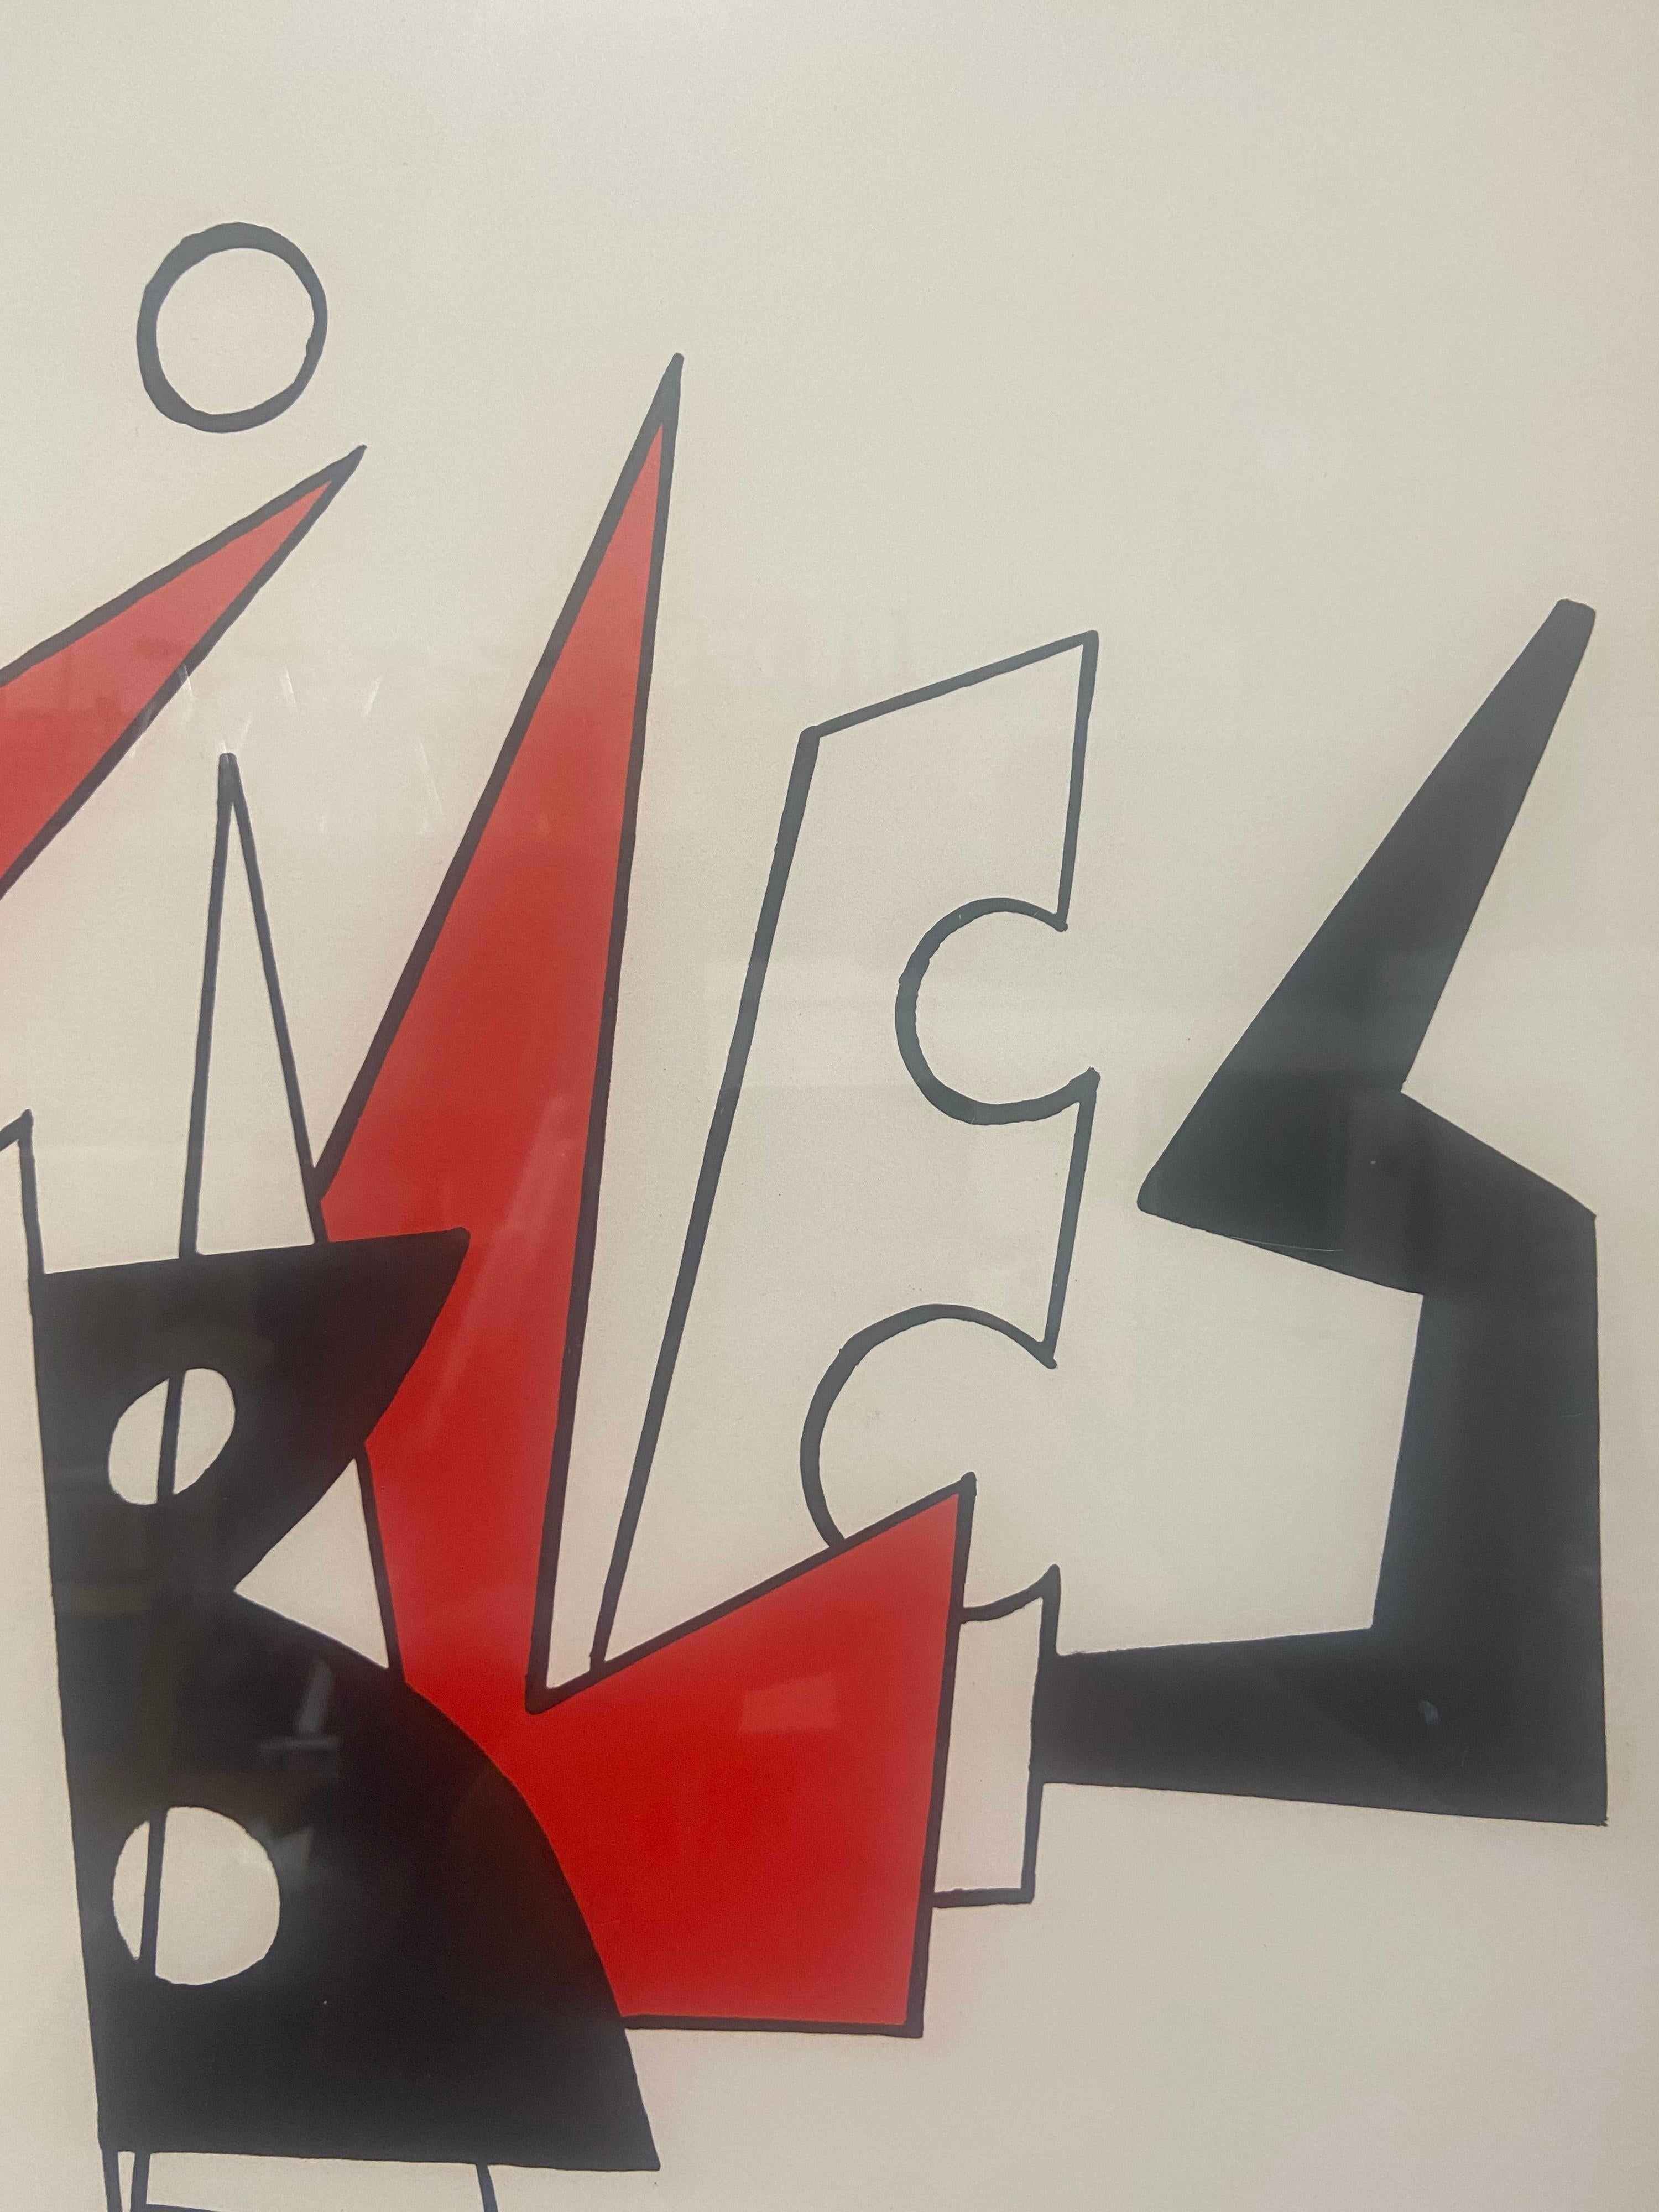 American Alexander Calder “Stabiles” Signed Lithograph